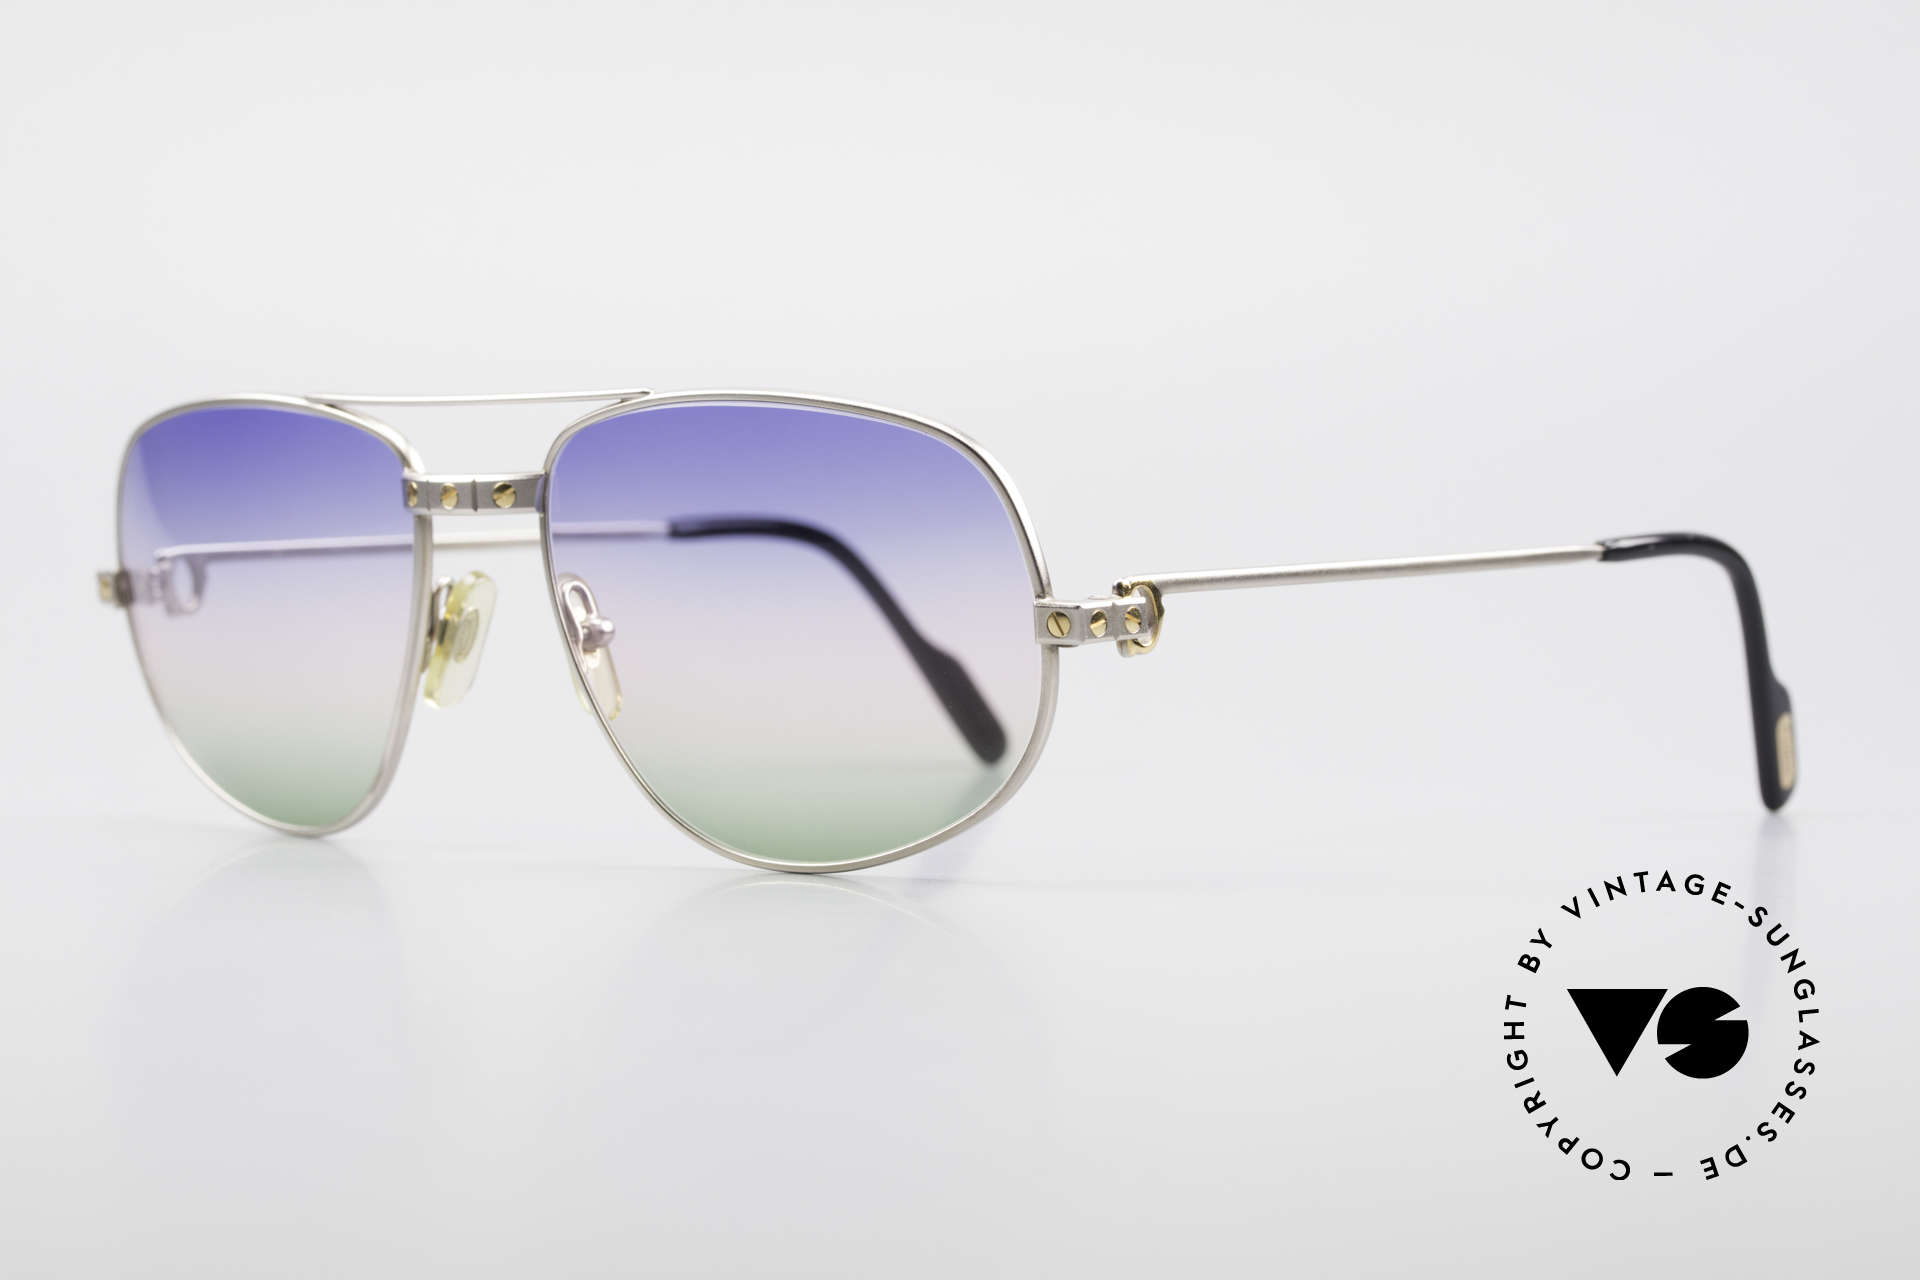 cartier santos sunglasses price